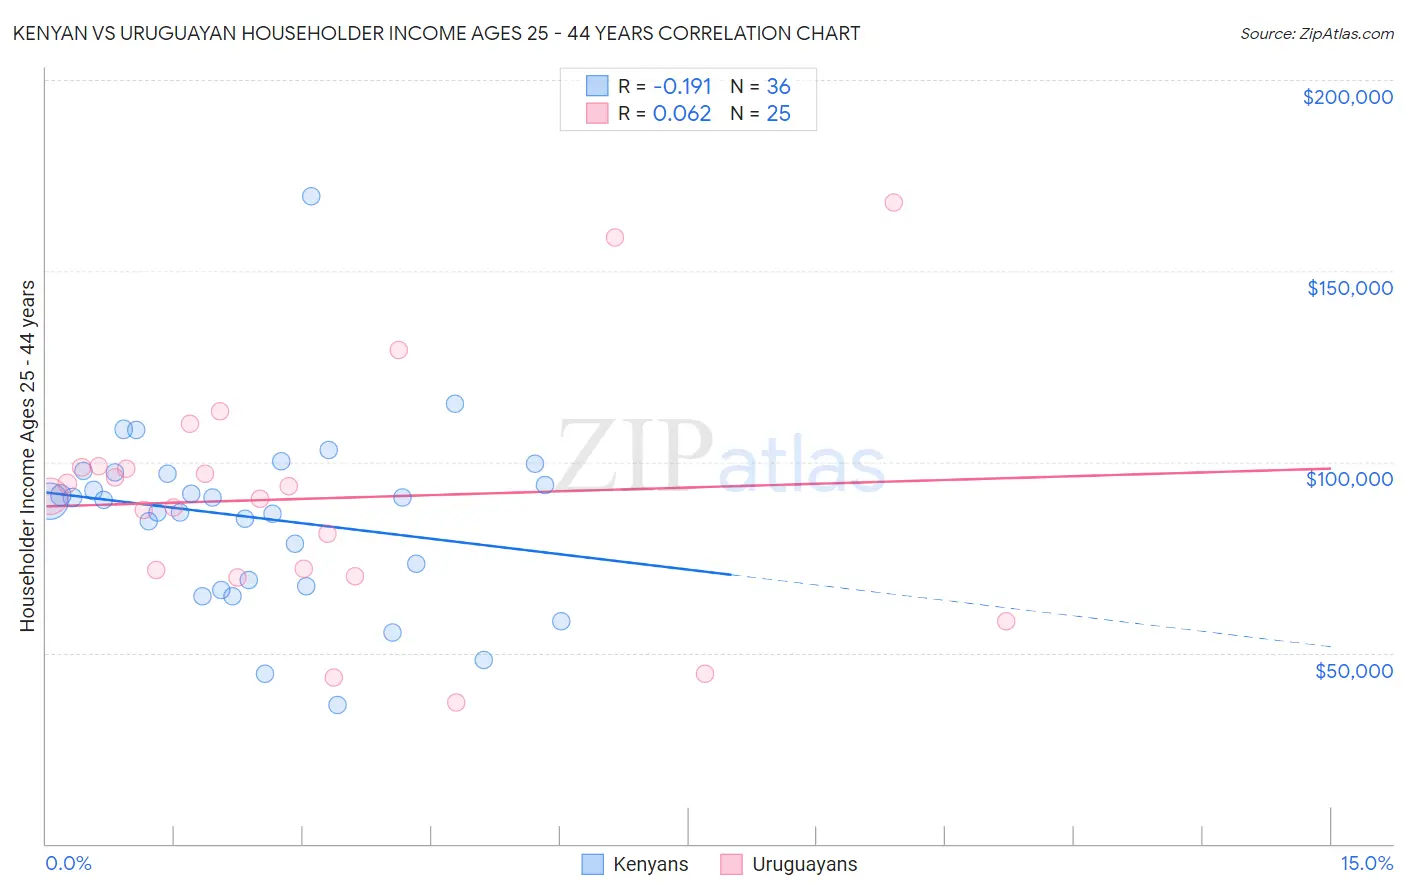 Kenyan vs Uruguayan Householder Income Ages 25 - 44 years